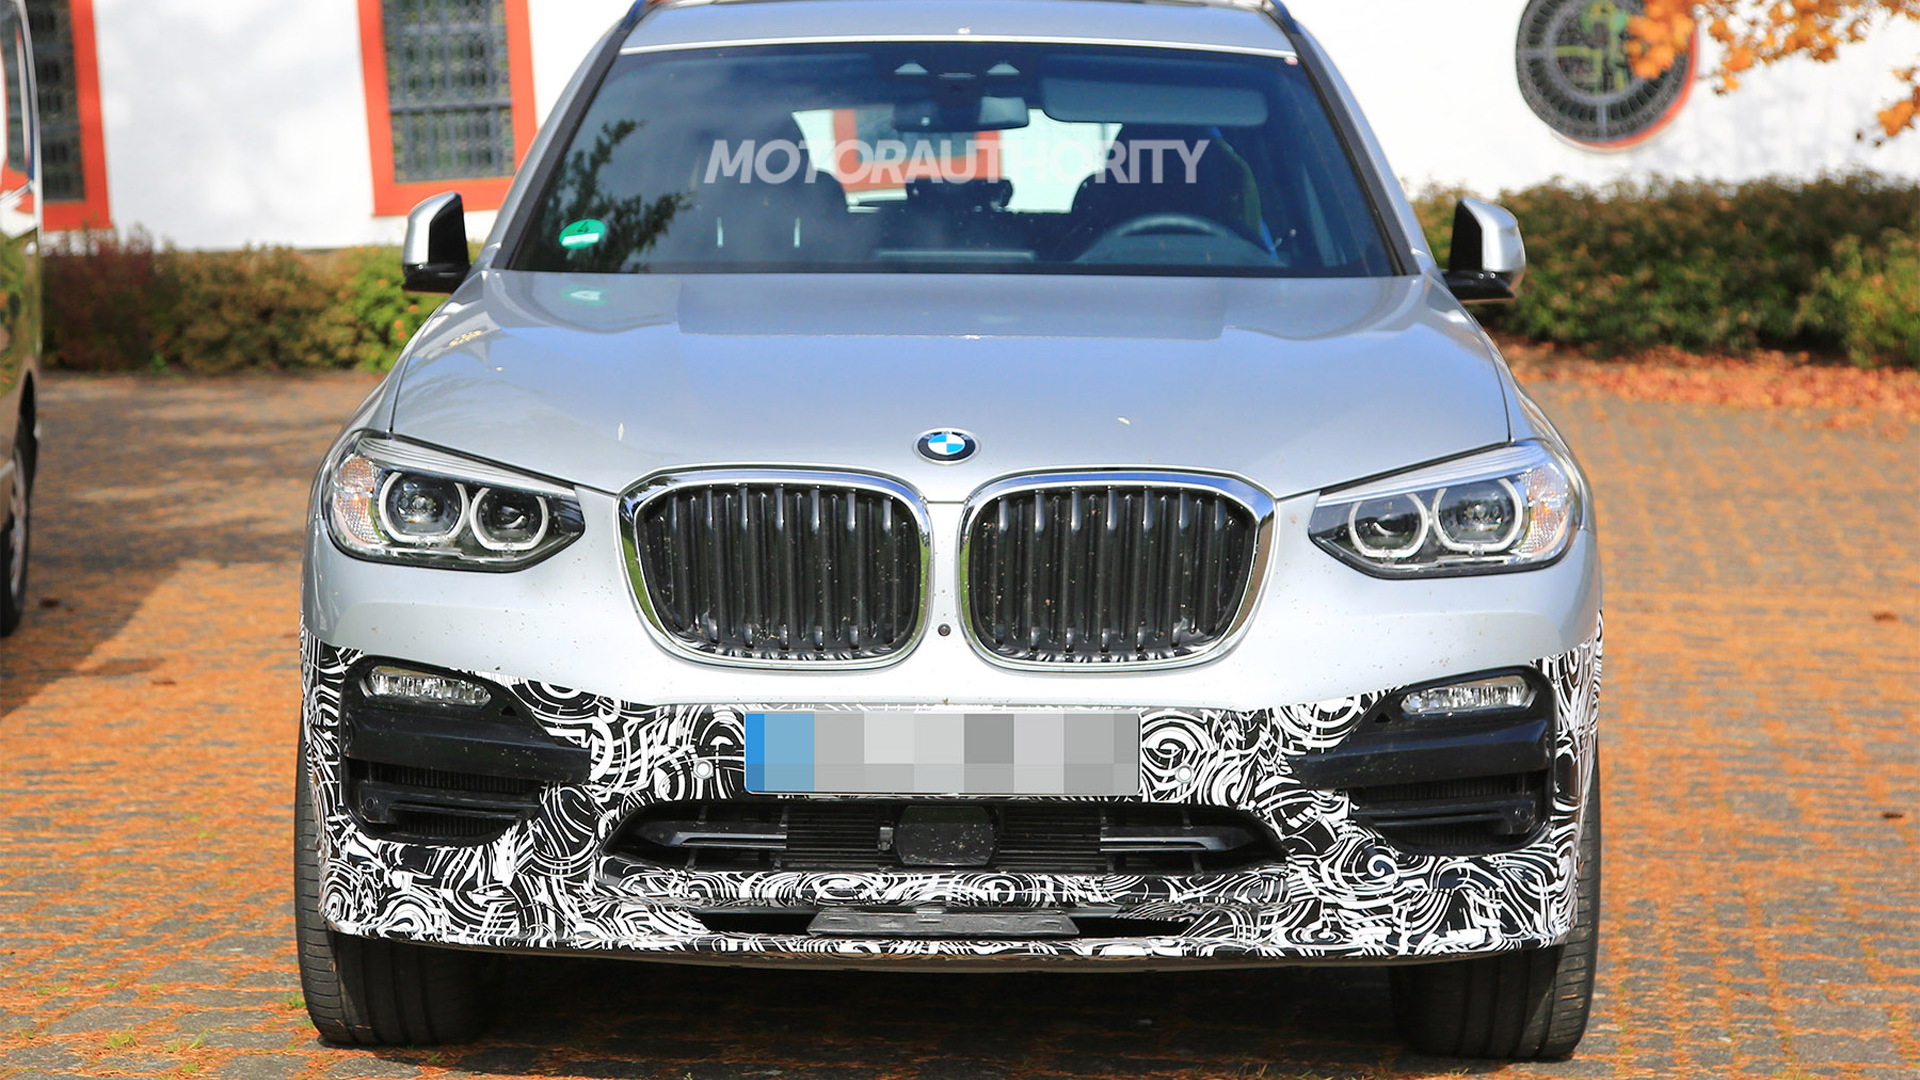 2018 BMW Alpina XD3 spy shots - Image via S. Baldauf/SB-Medien